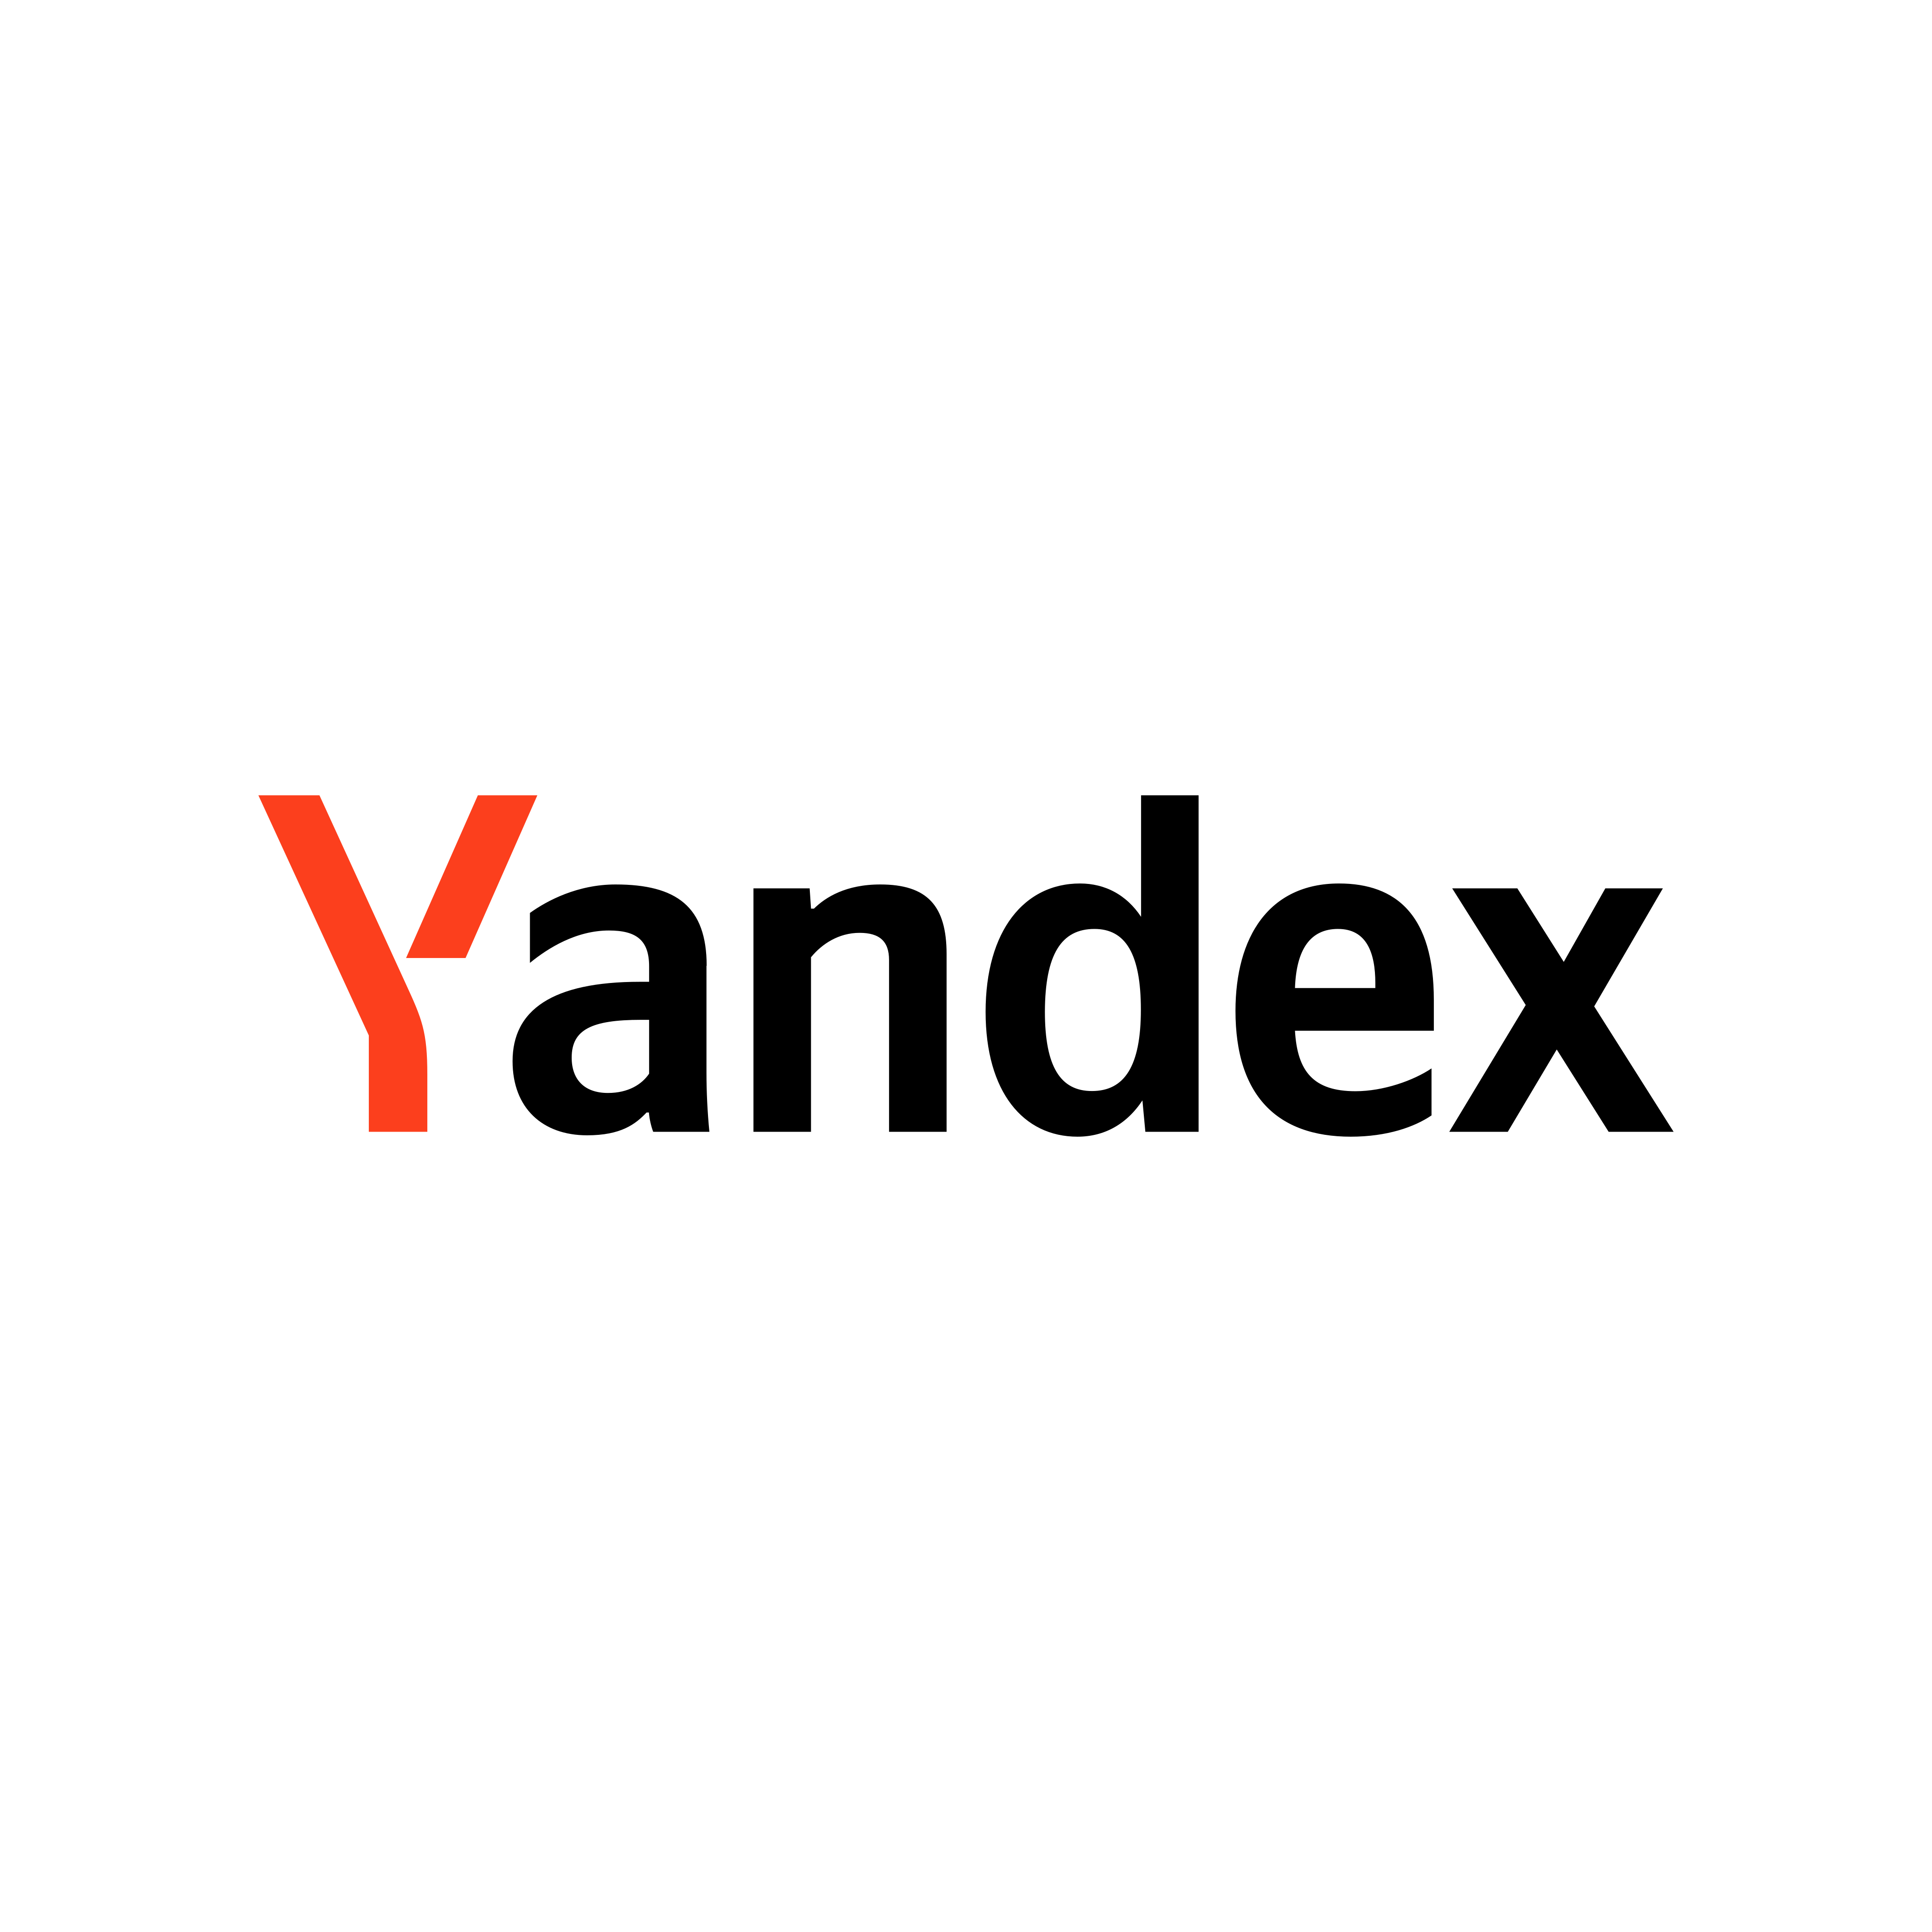 yandex logo 0 - Yandex Logo